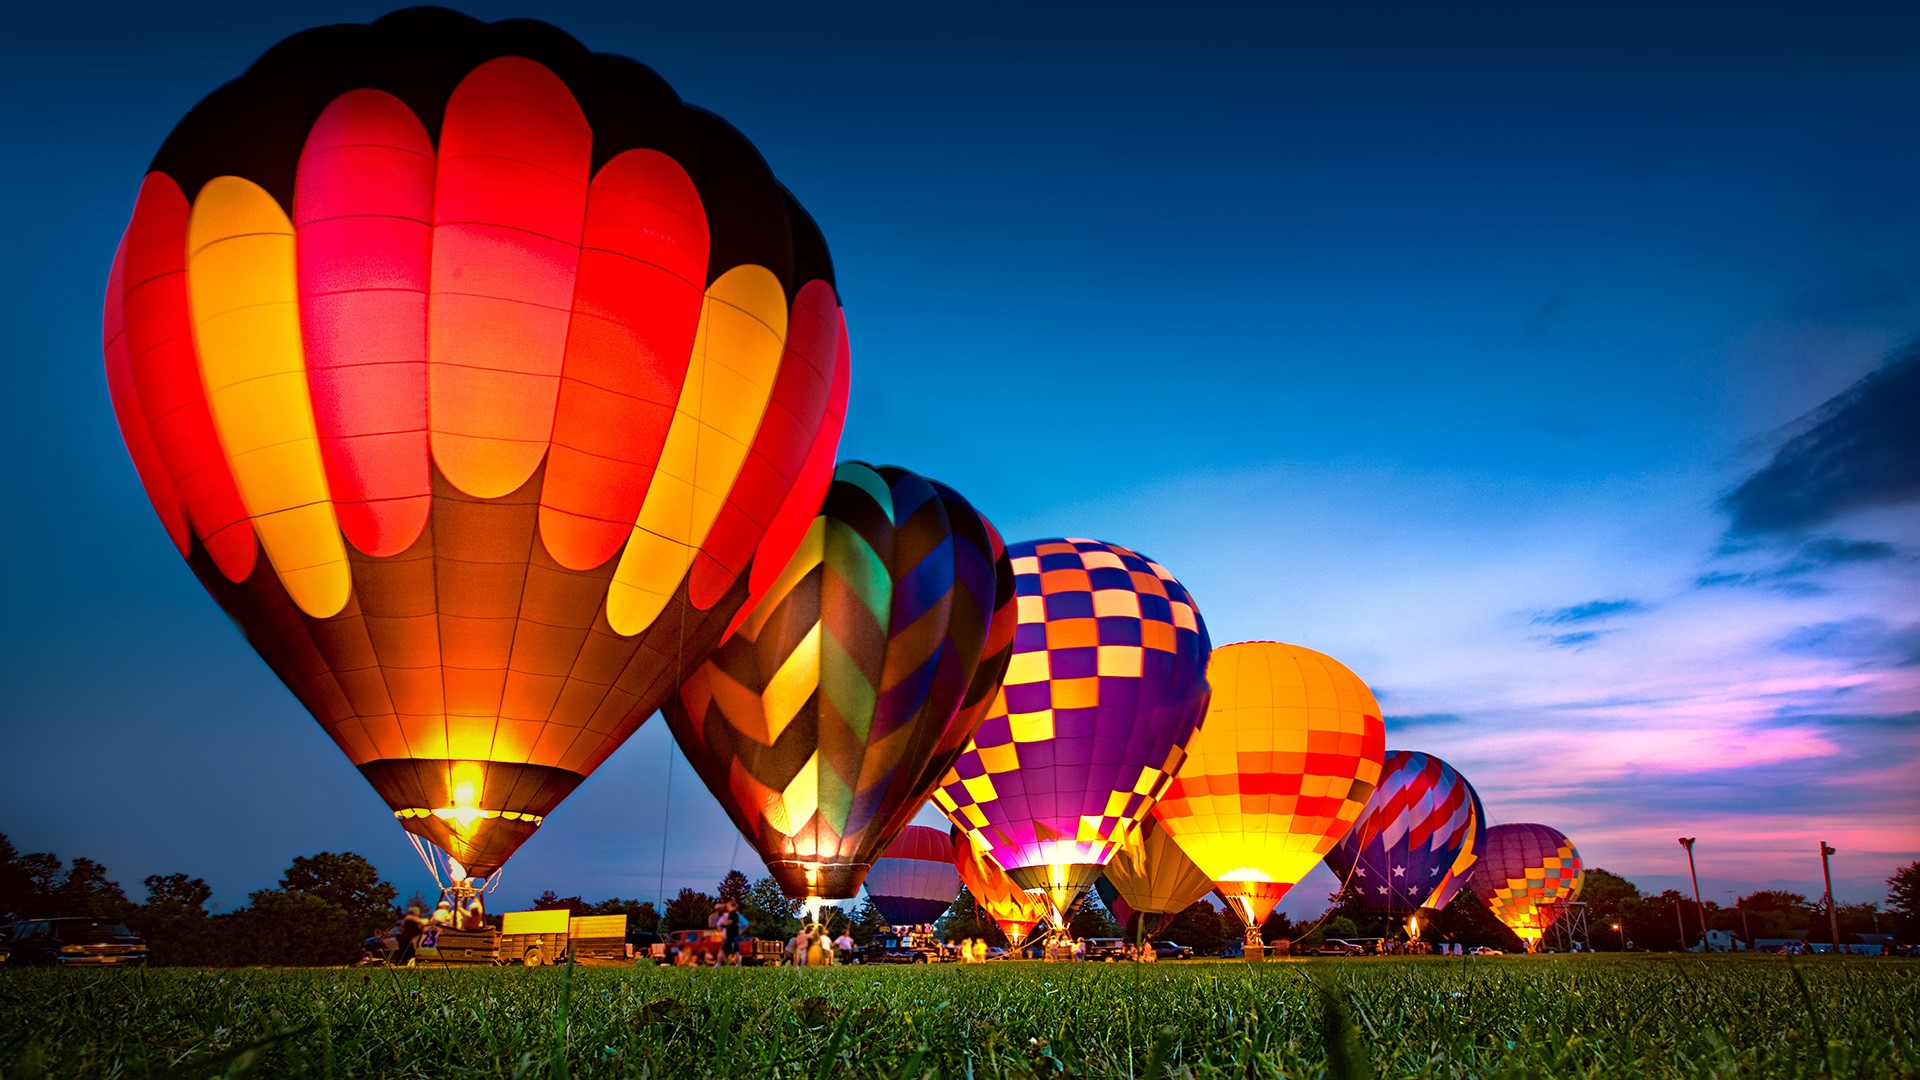 Hot Air Balloon Festival night glow, Monore, Wisconsin, USA Windows